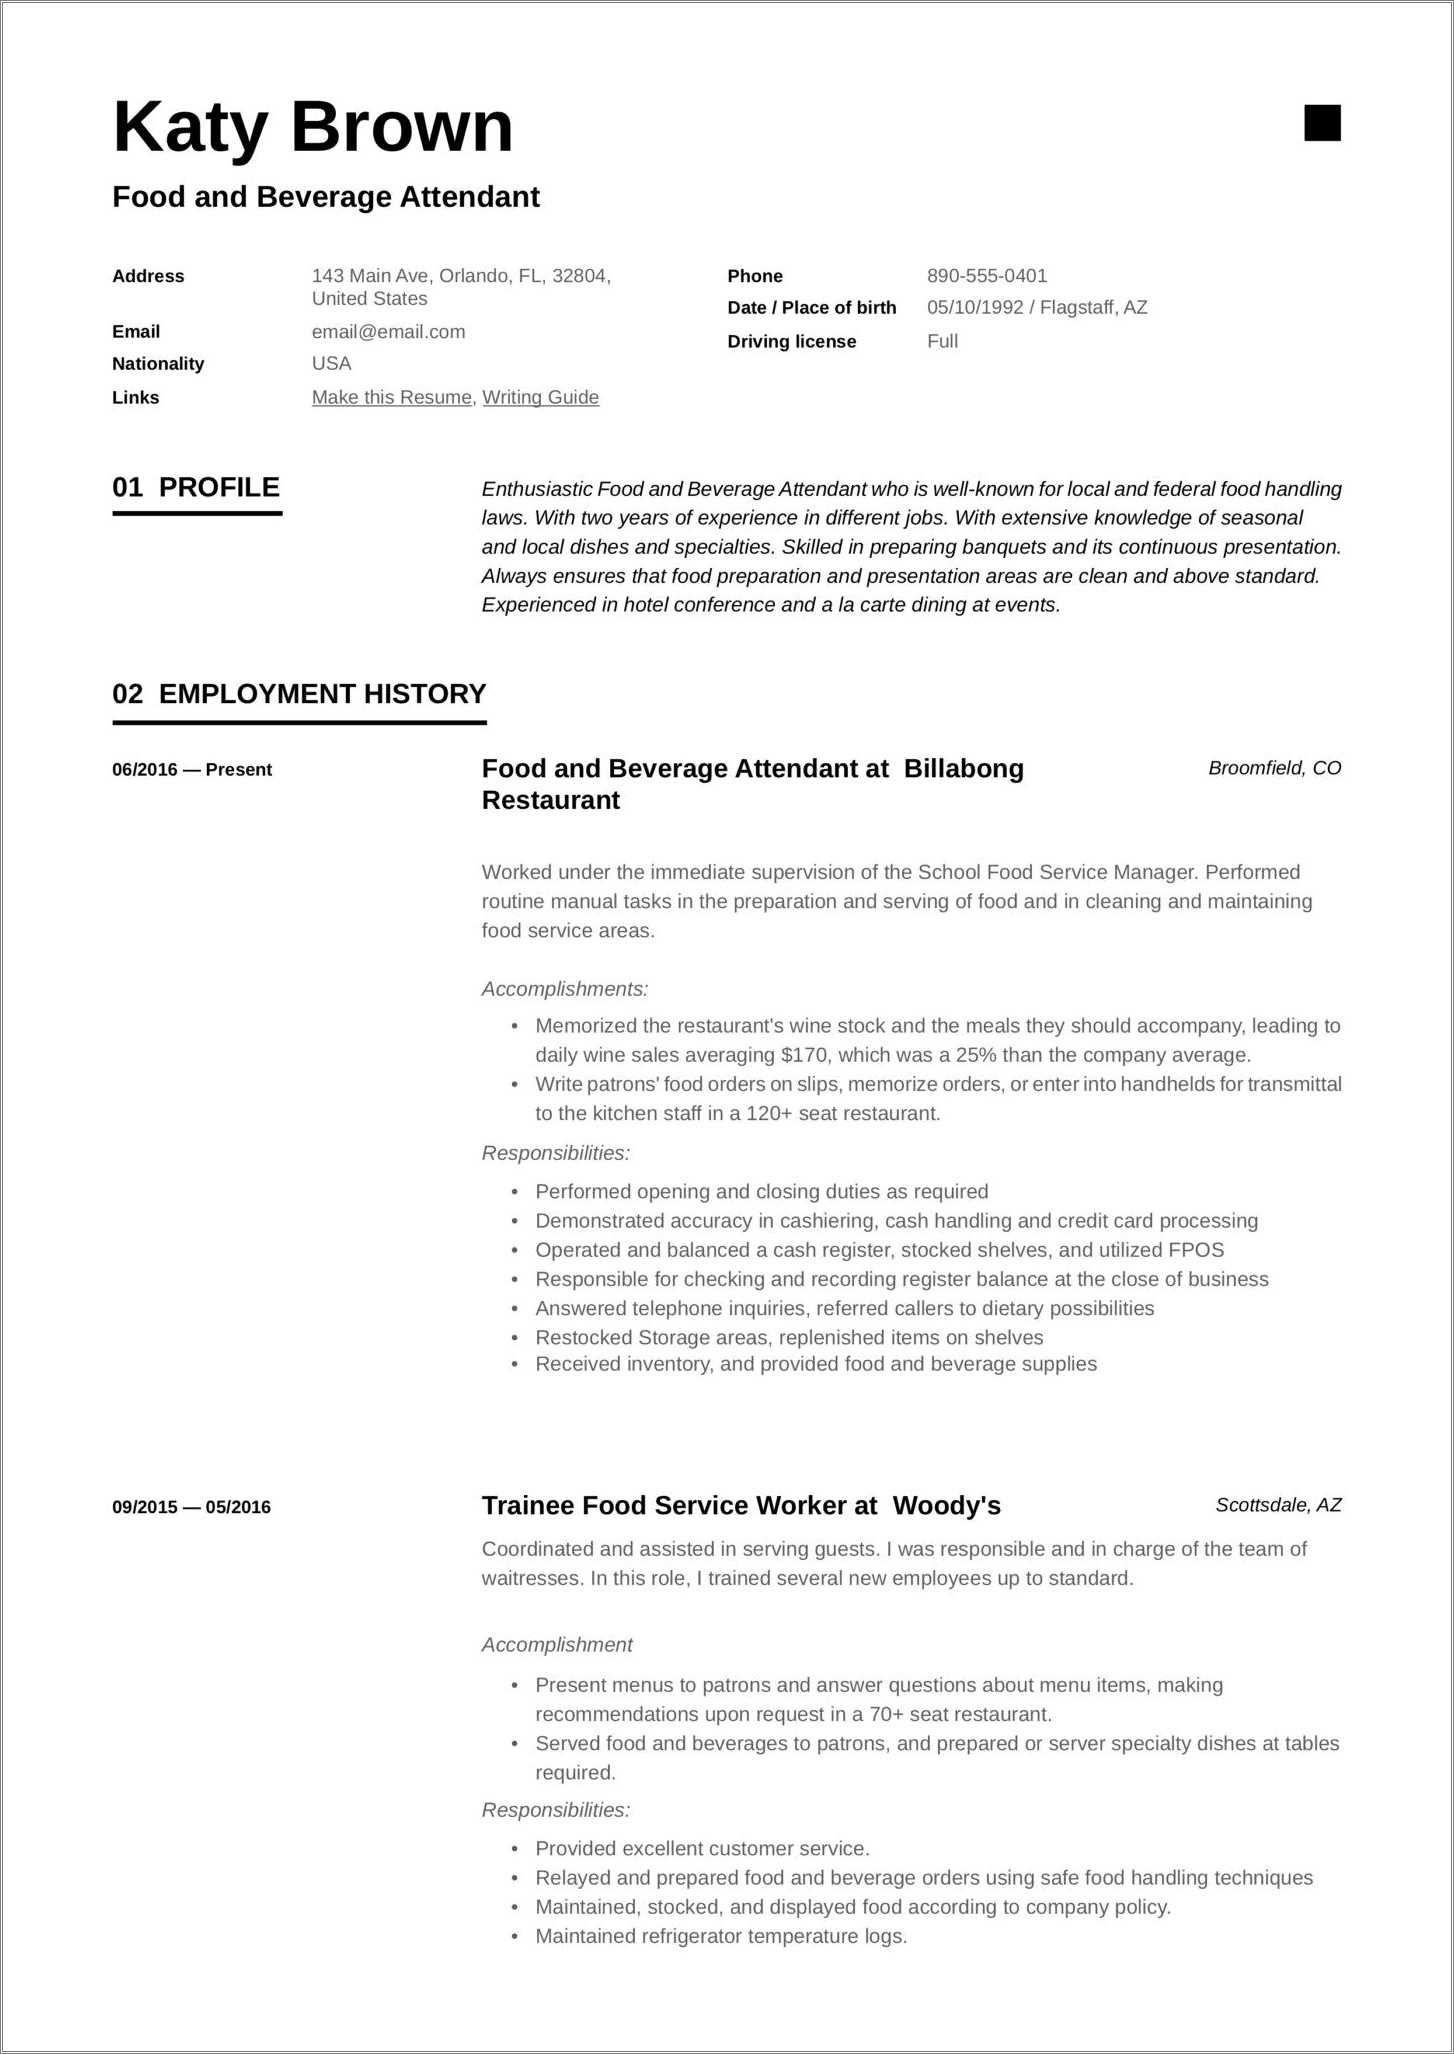 Personal Care Aide Job Description For Resume